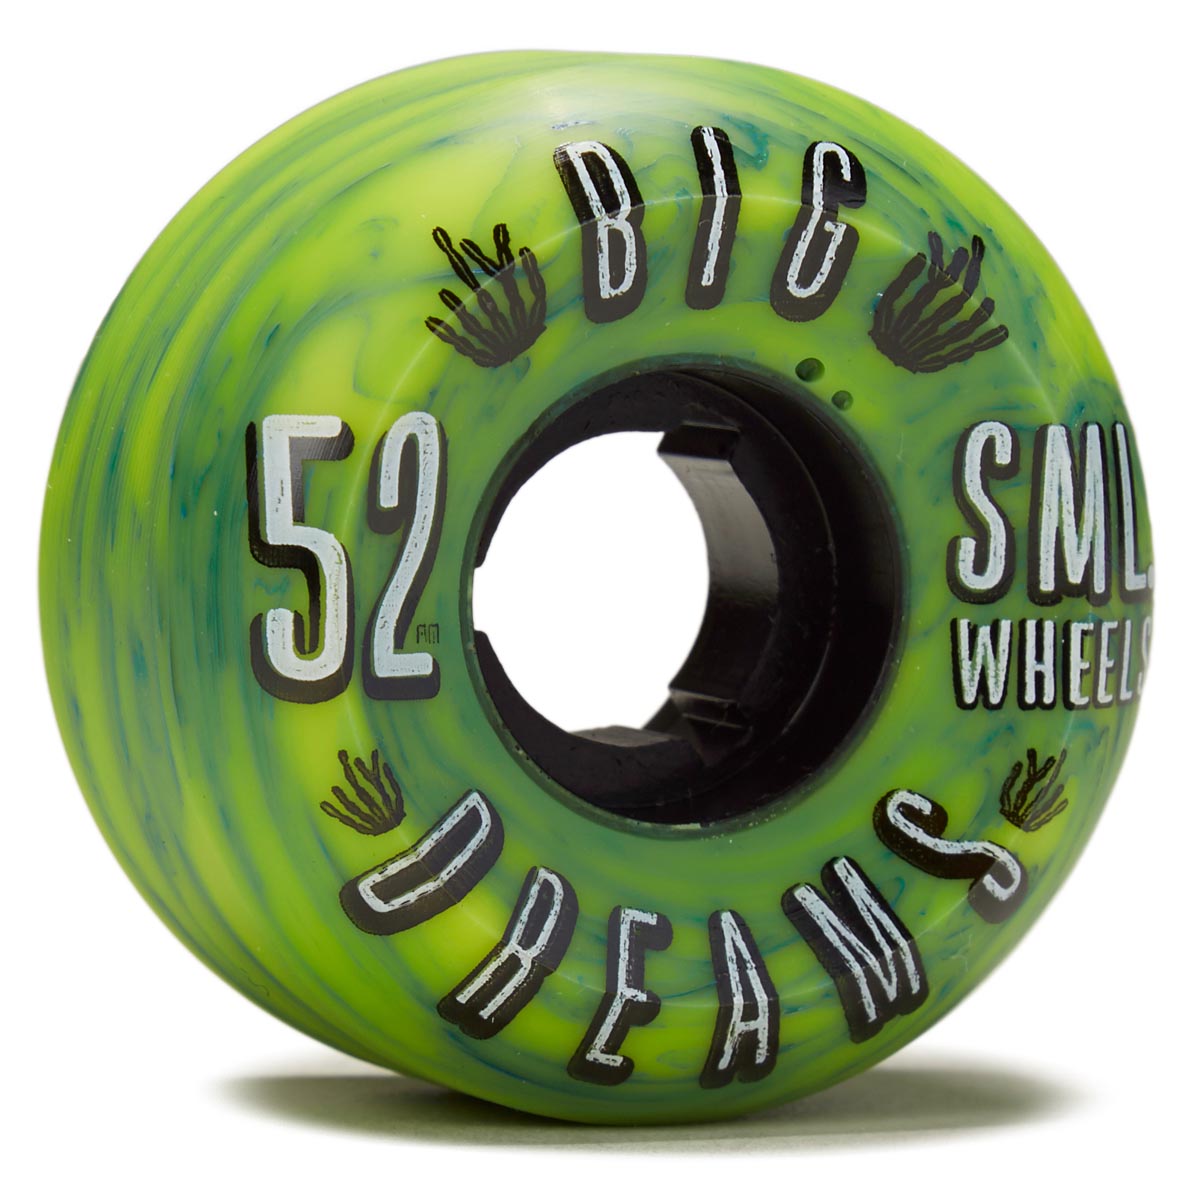 SML Succulent Cruisers 92a Skateboard Wheels - Blue/Yellow Swirl - 52mm image 1